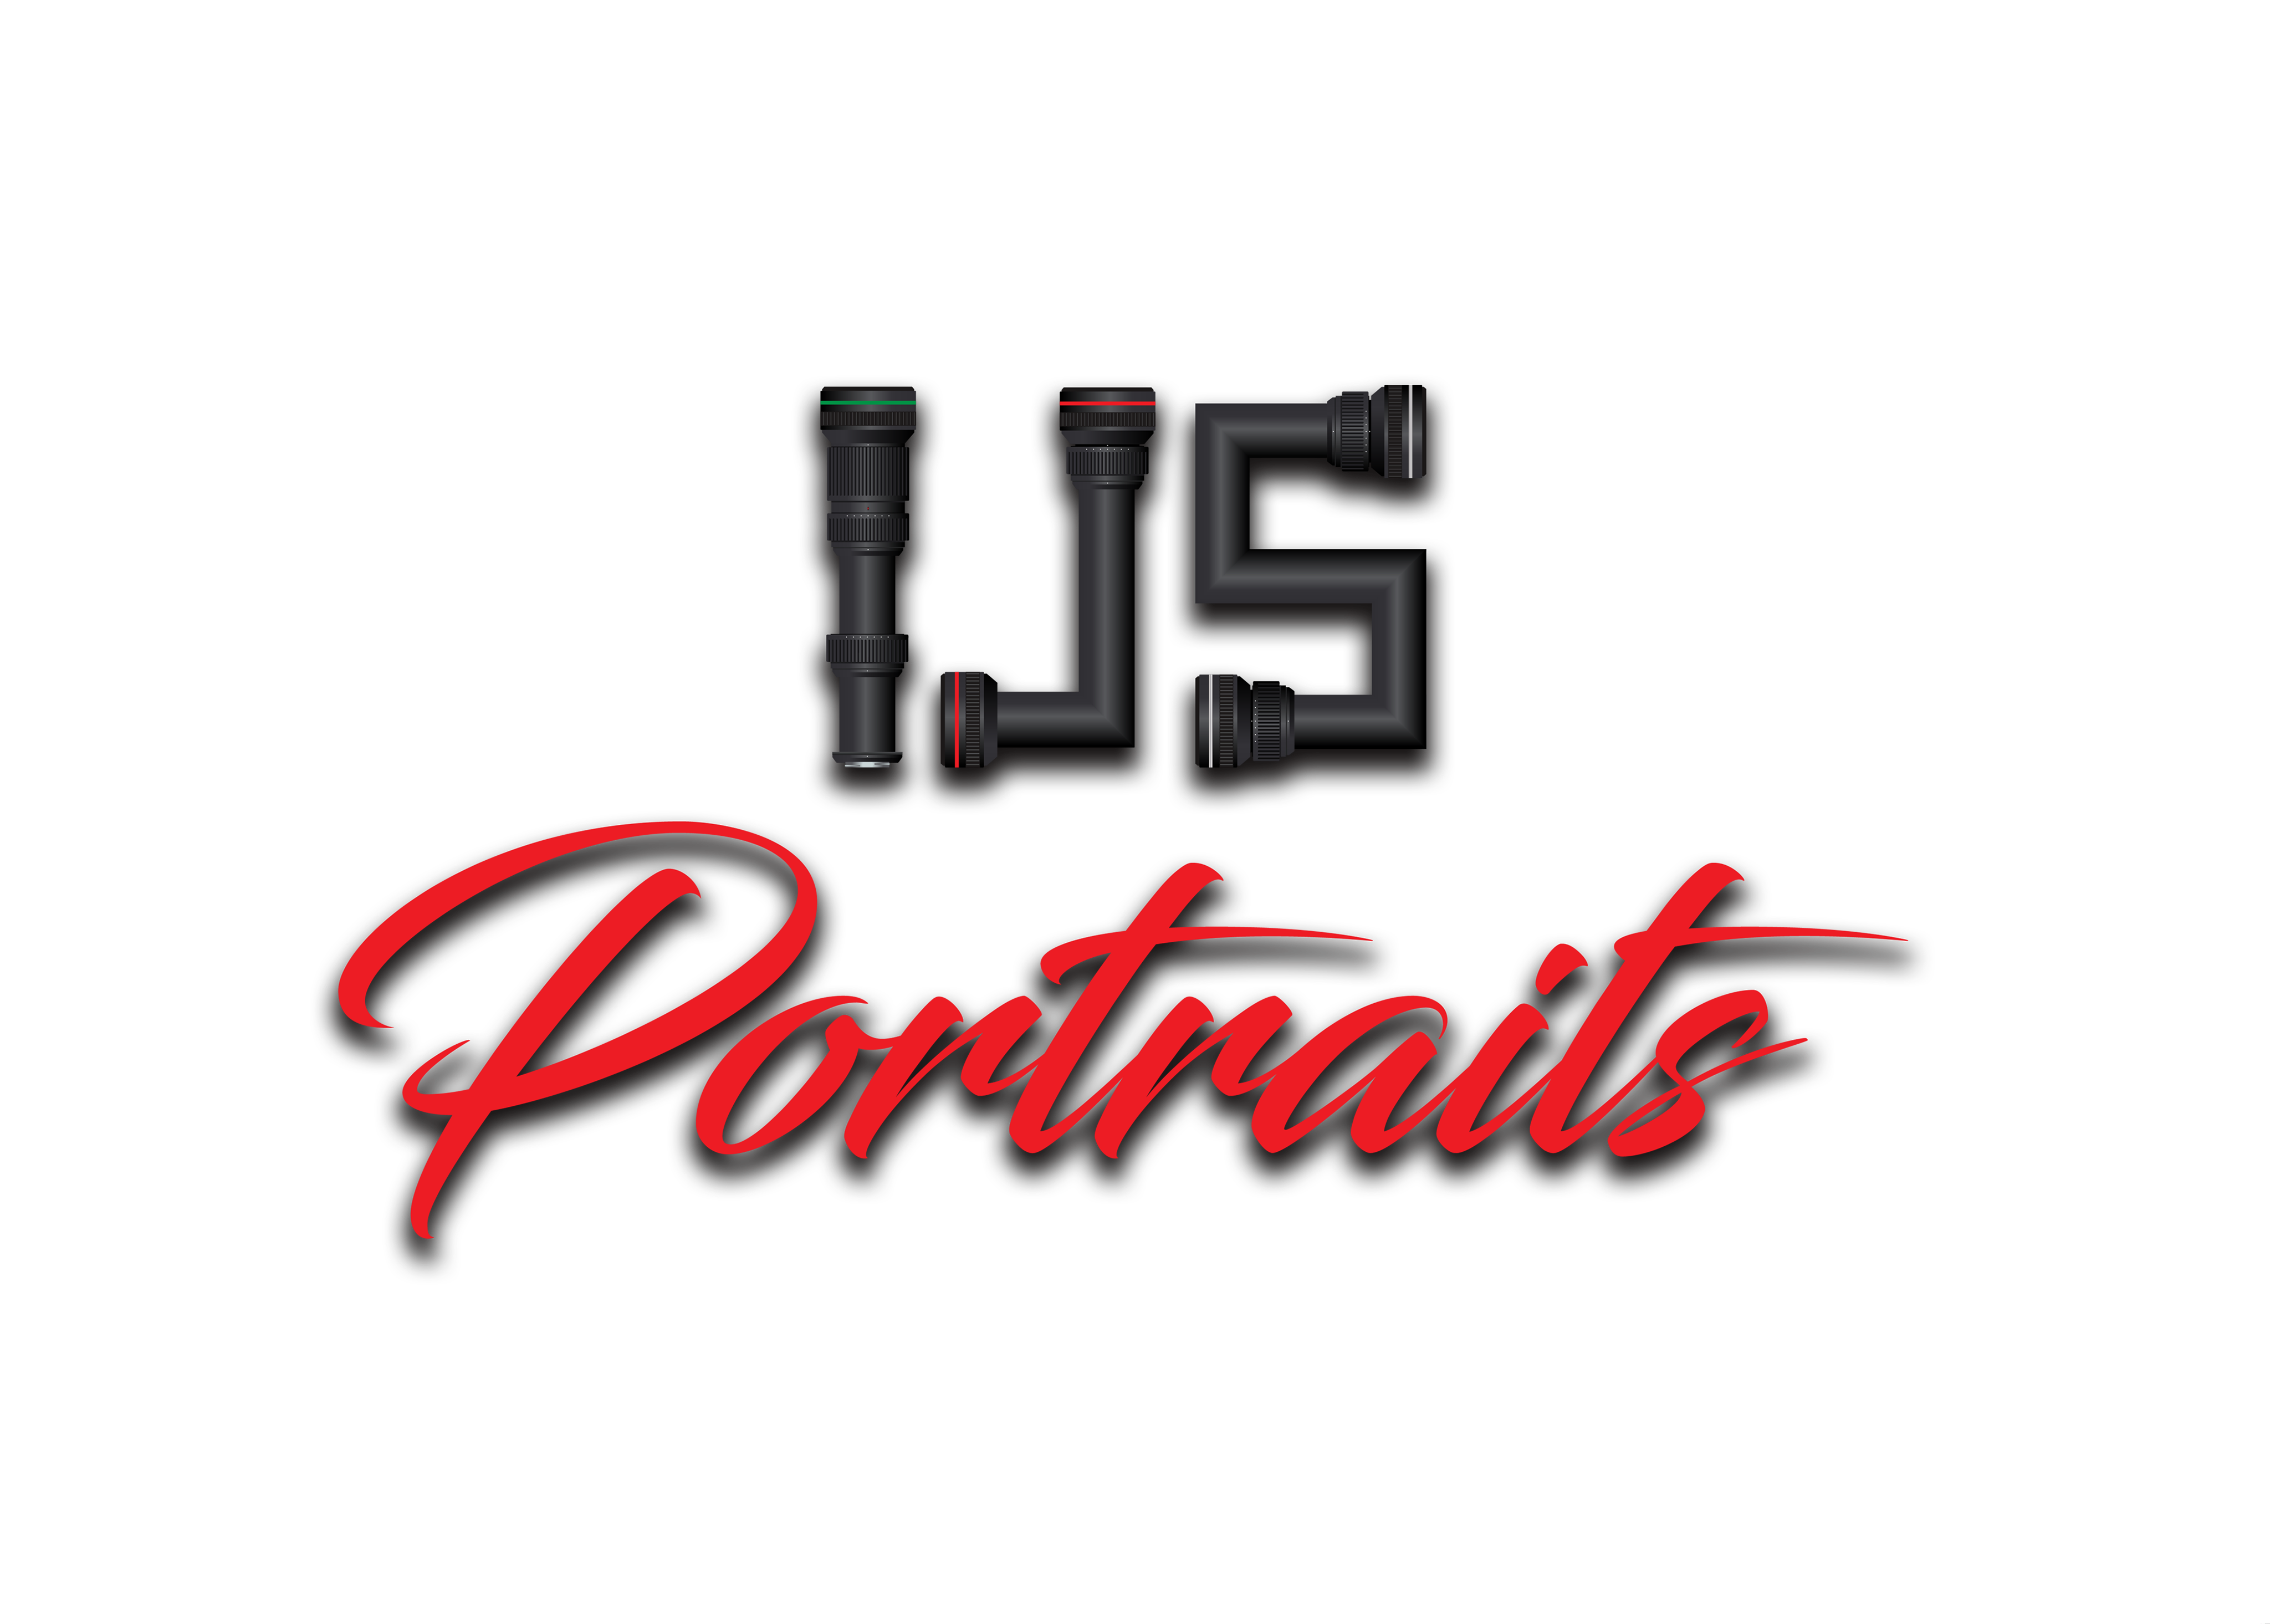 IJS Portraits